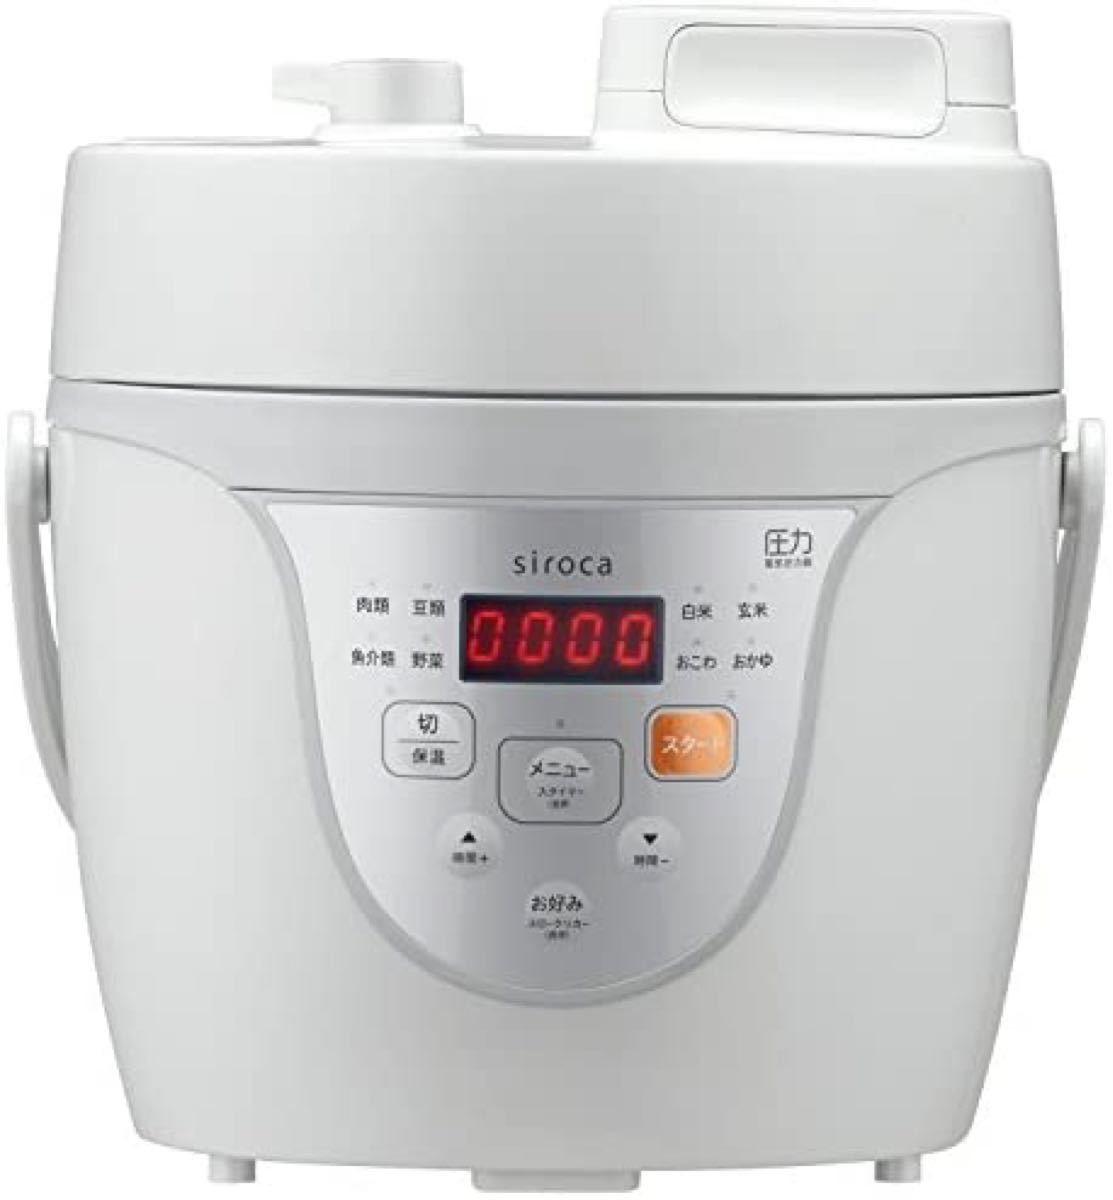 siroca 電気圧力鍋 SPC-211グレー[圧力/無水/蒸し/炊飯《新品》